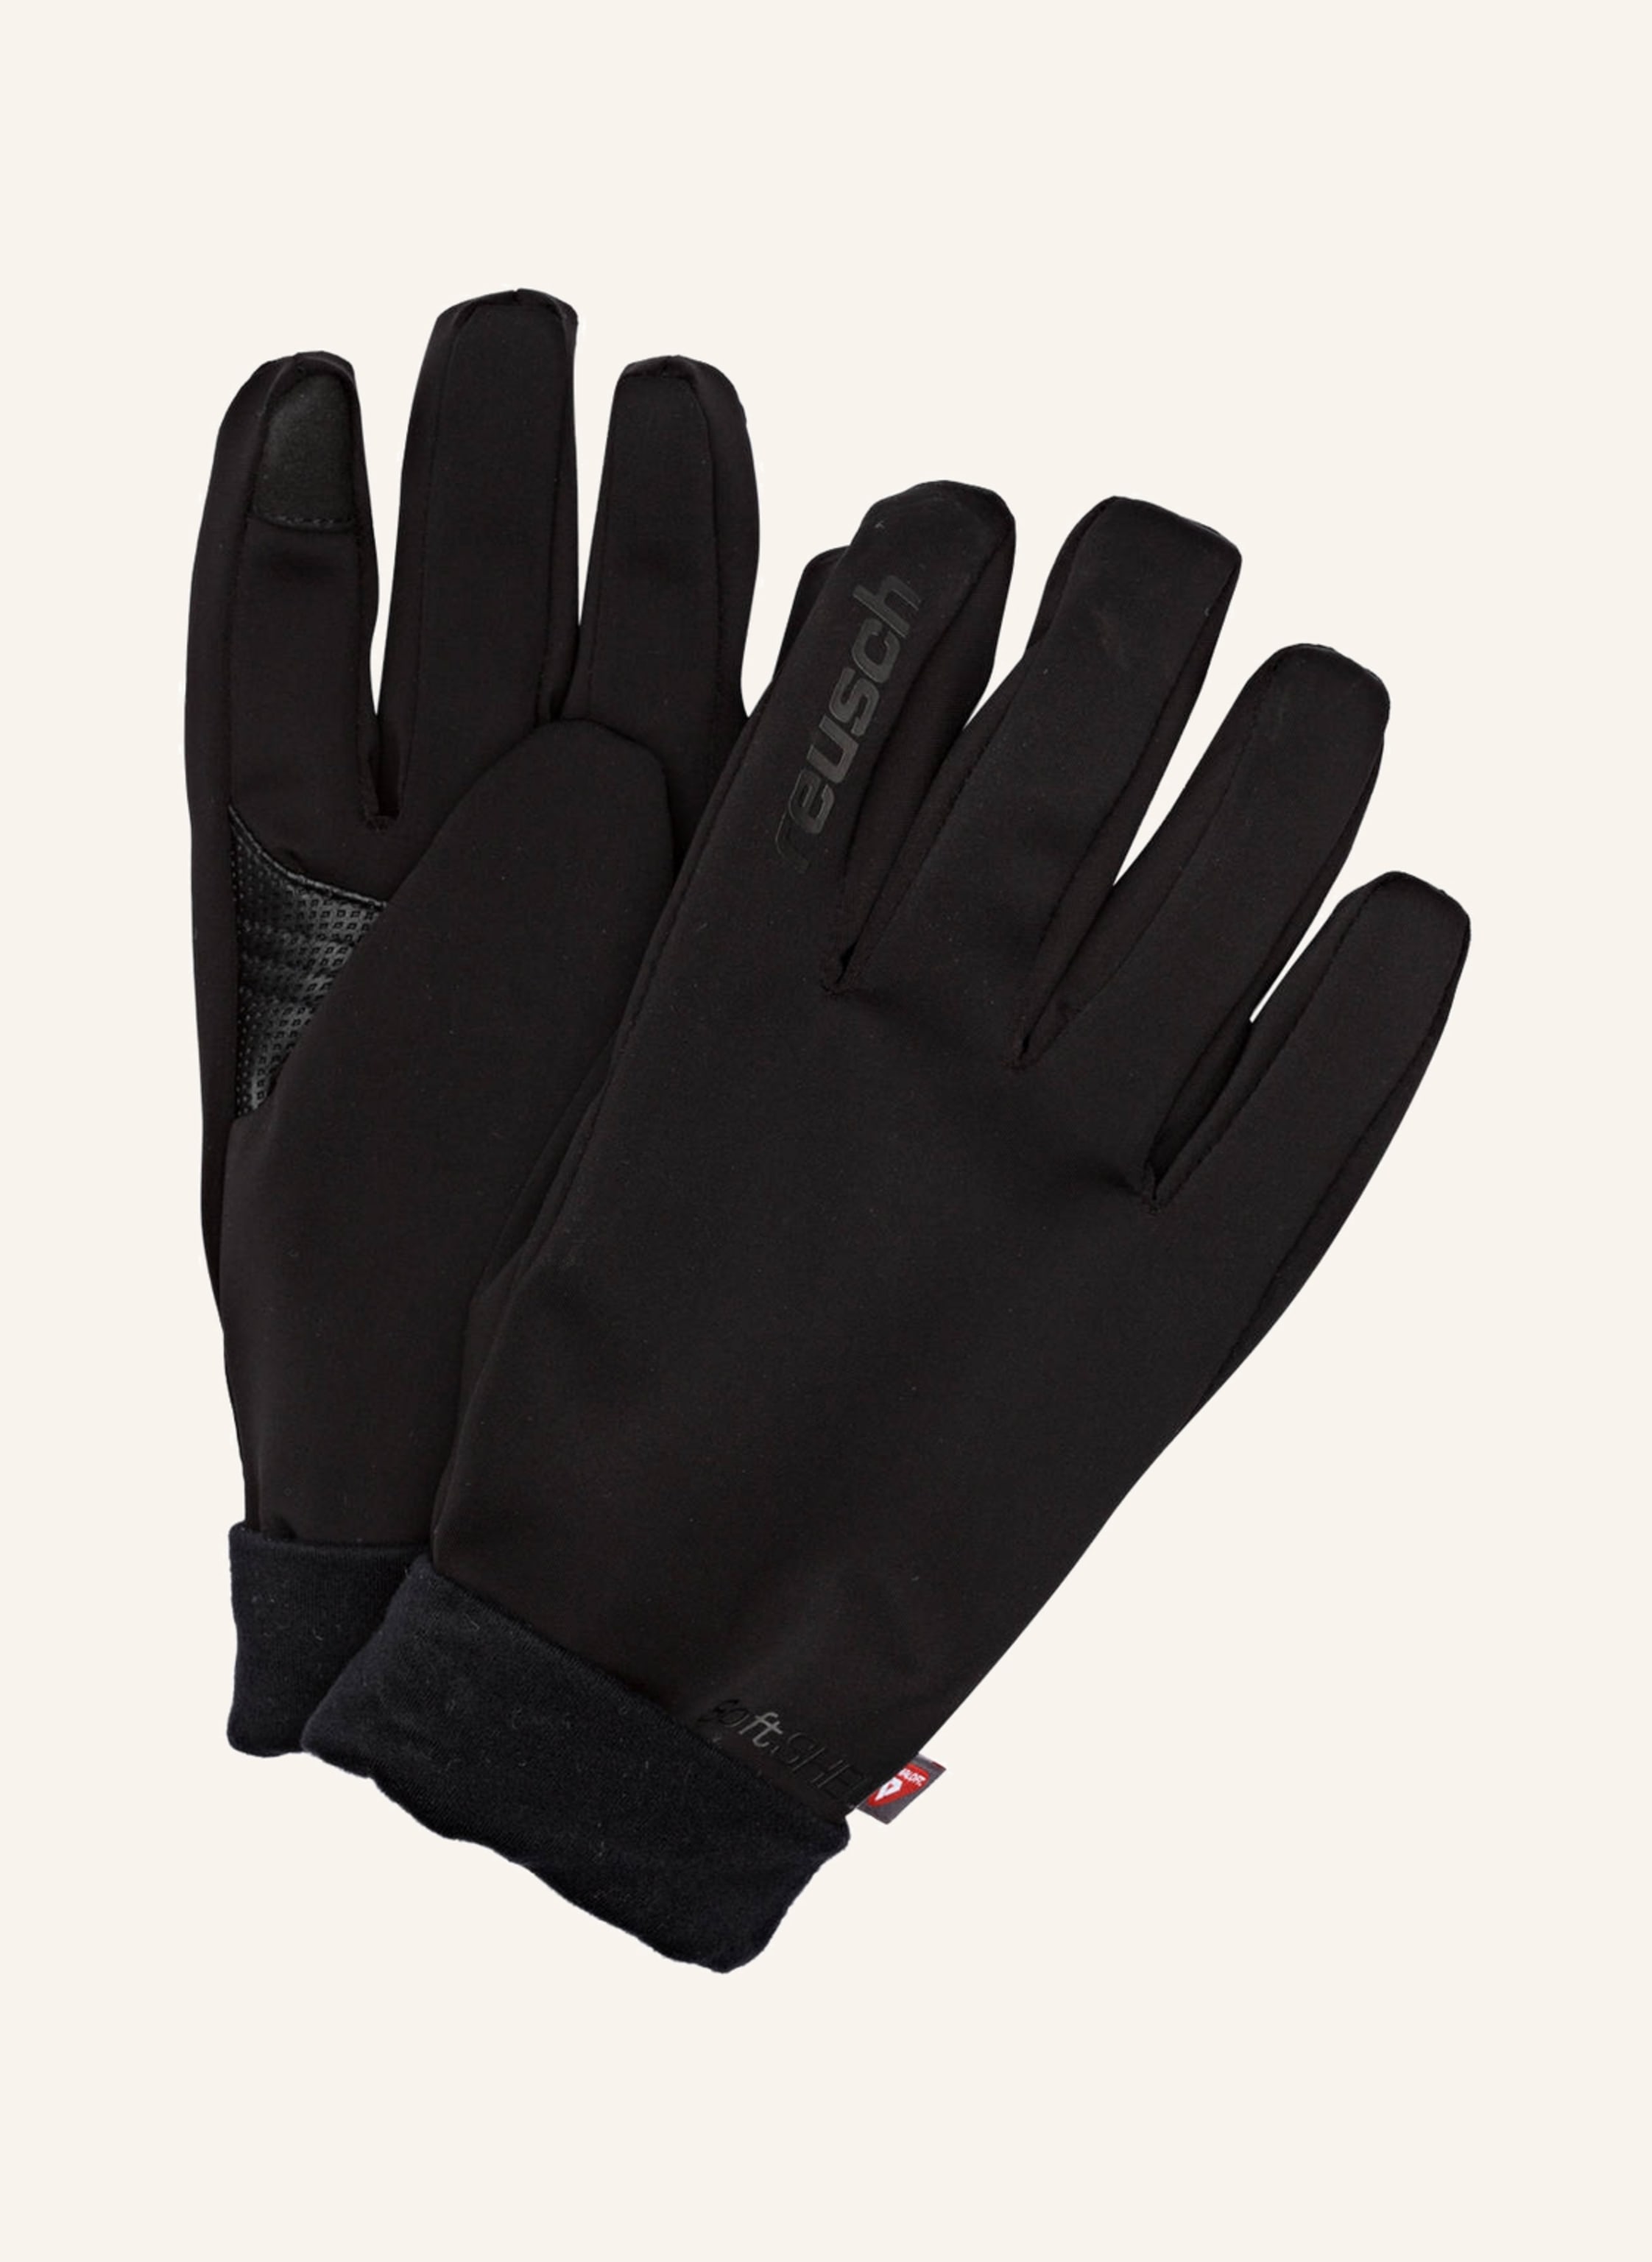 Multisport-Handschuhe reusch TOUCH-TEC™ WALK in schwarz